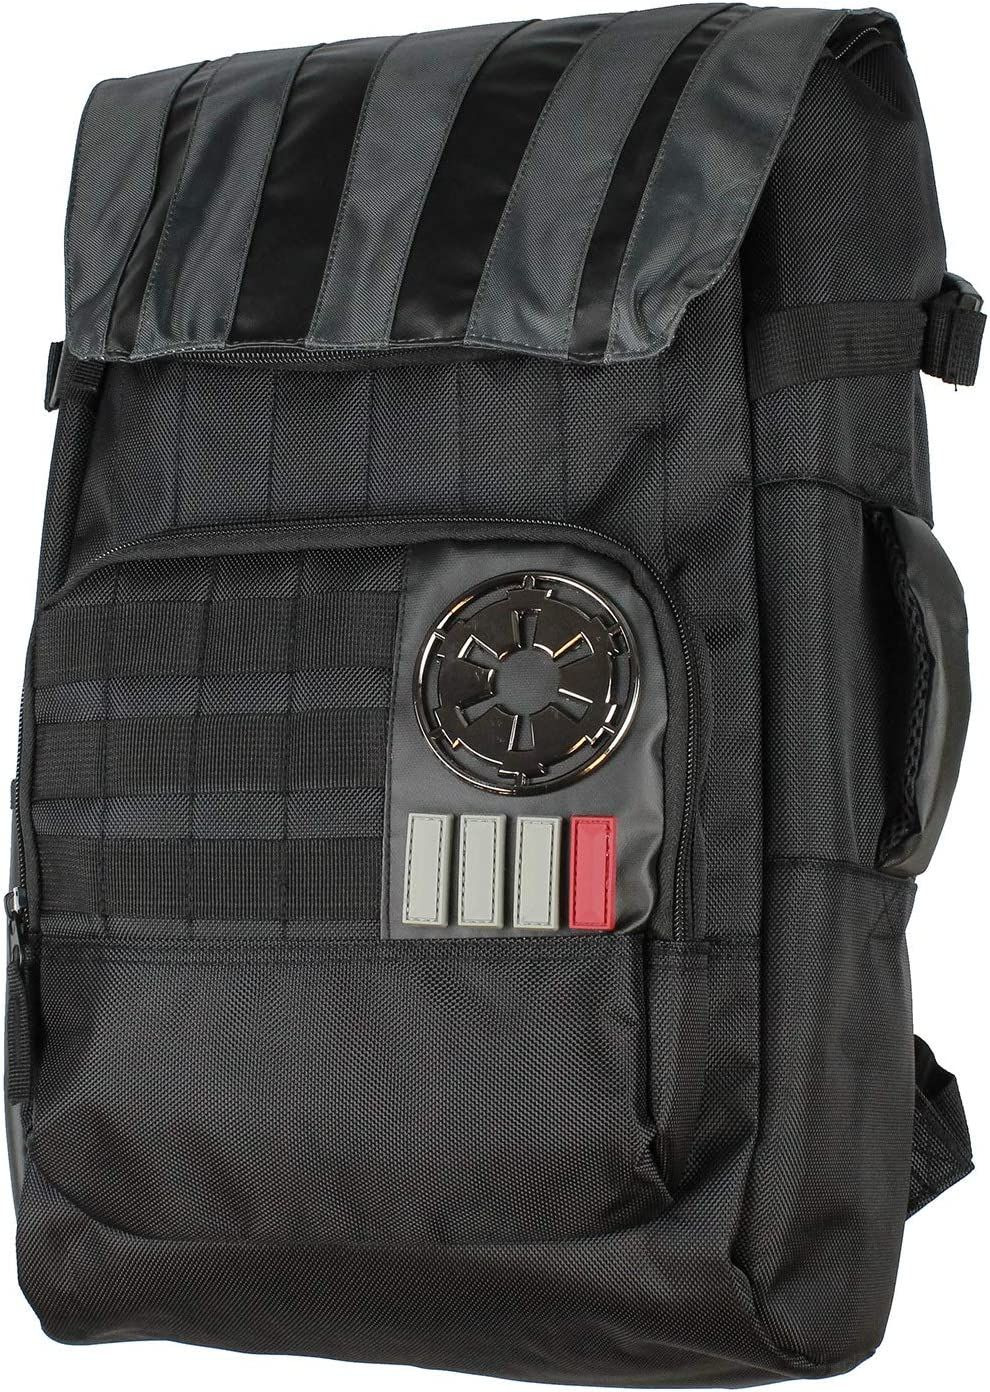 Star Wars Darth Vader Costume Inspired Bag Padded Sleeve Tech Laptop Backpack 